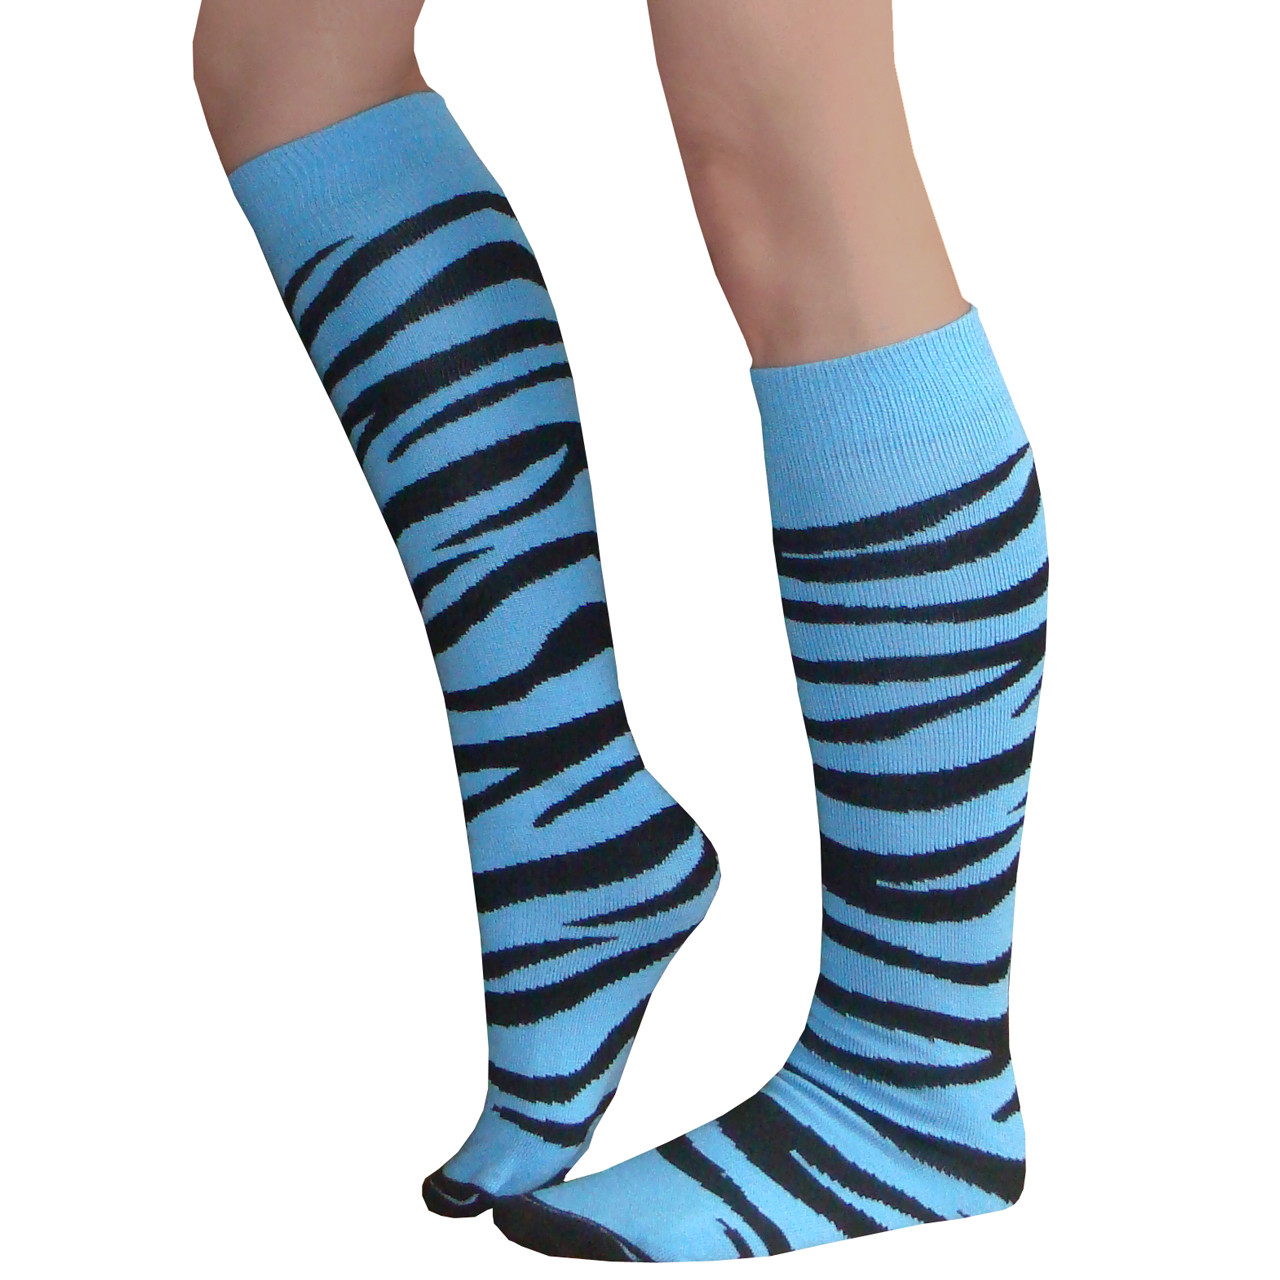 Black & Blue Stripes & Printed Smiles Knee High Toe Socks - Toe Socks